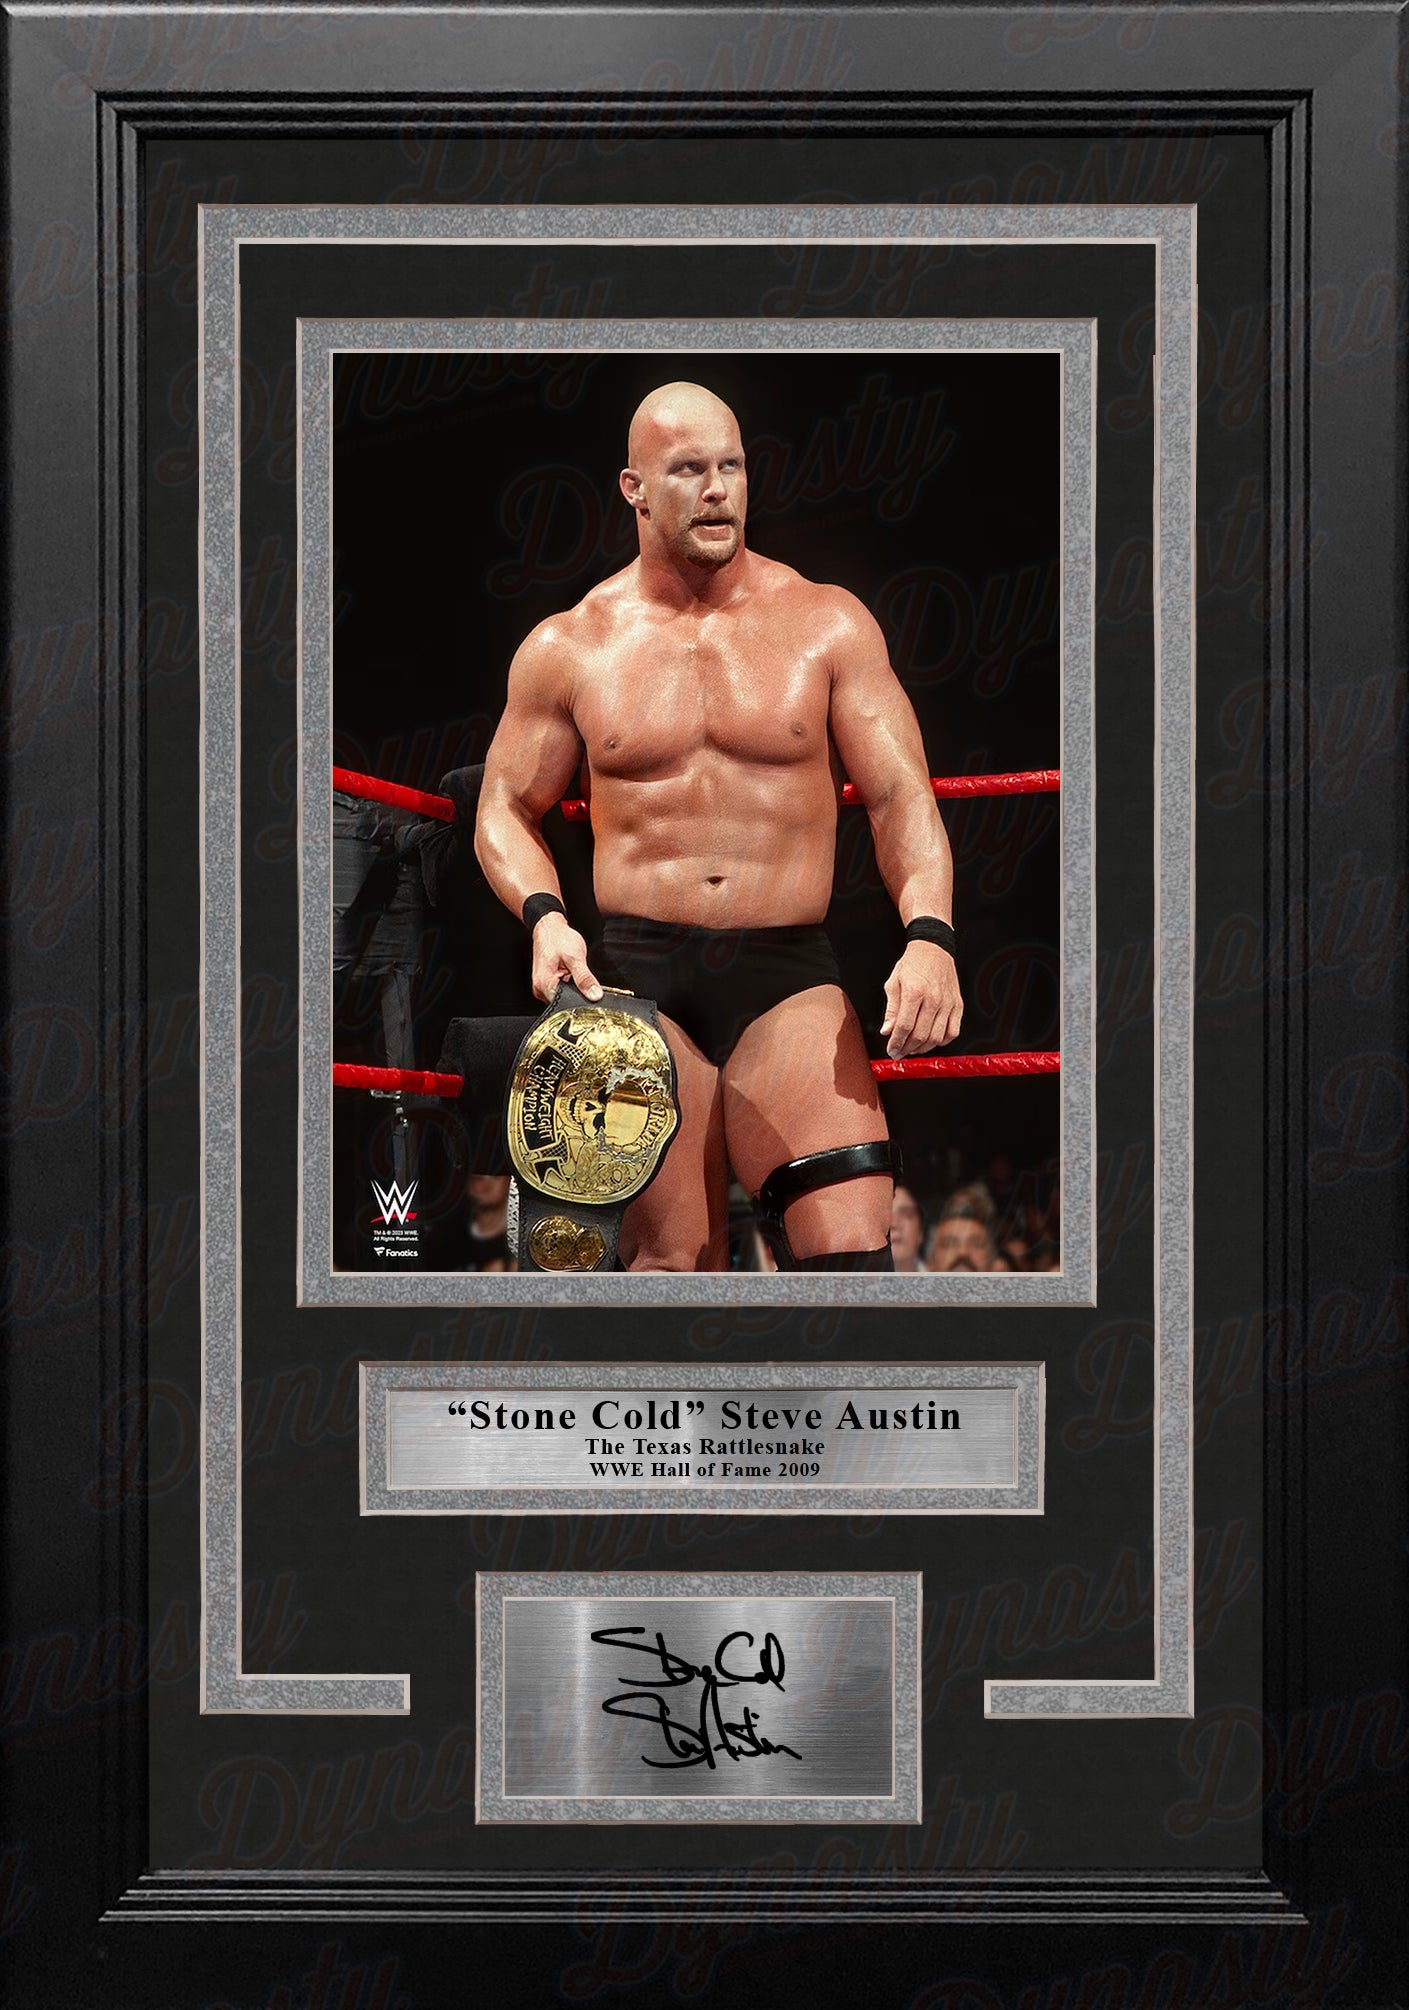 Stone Cold Steve Austin Smoking Skull Belt 8x10 Framed WWE Wrestling Photo with Engraved Autograph - Dynasty Sports & Framing 